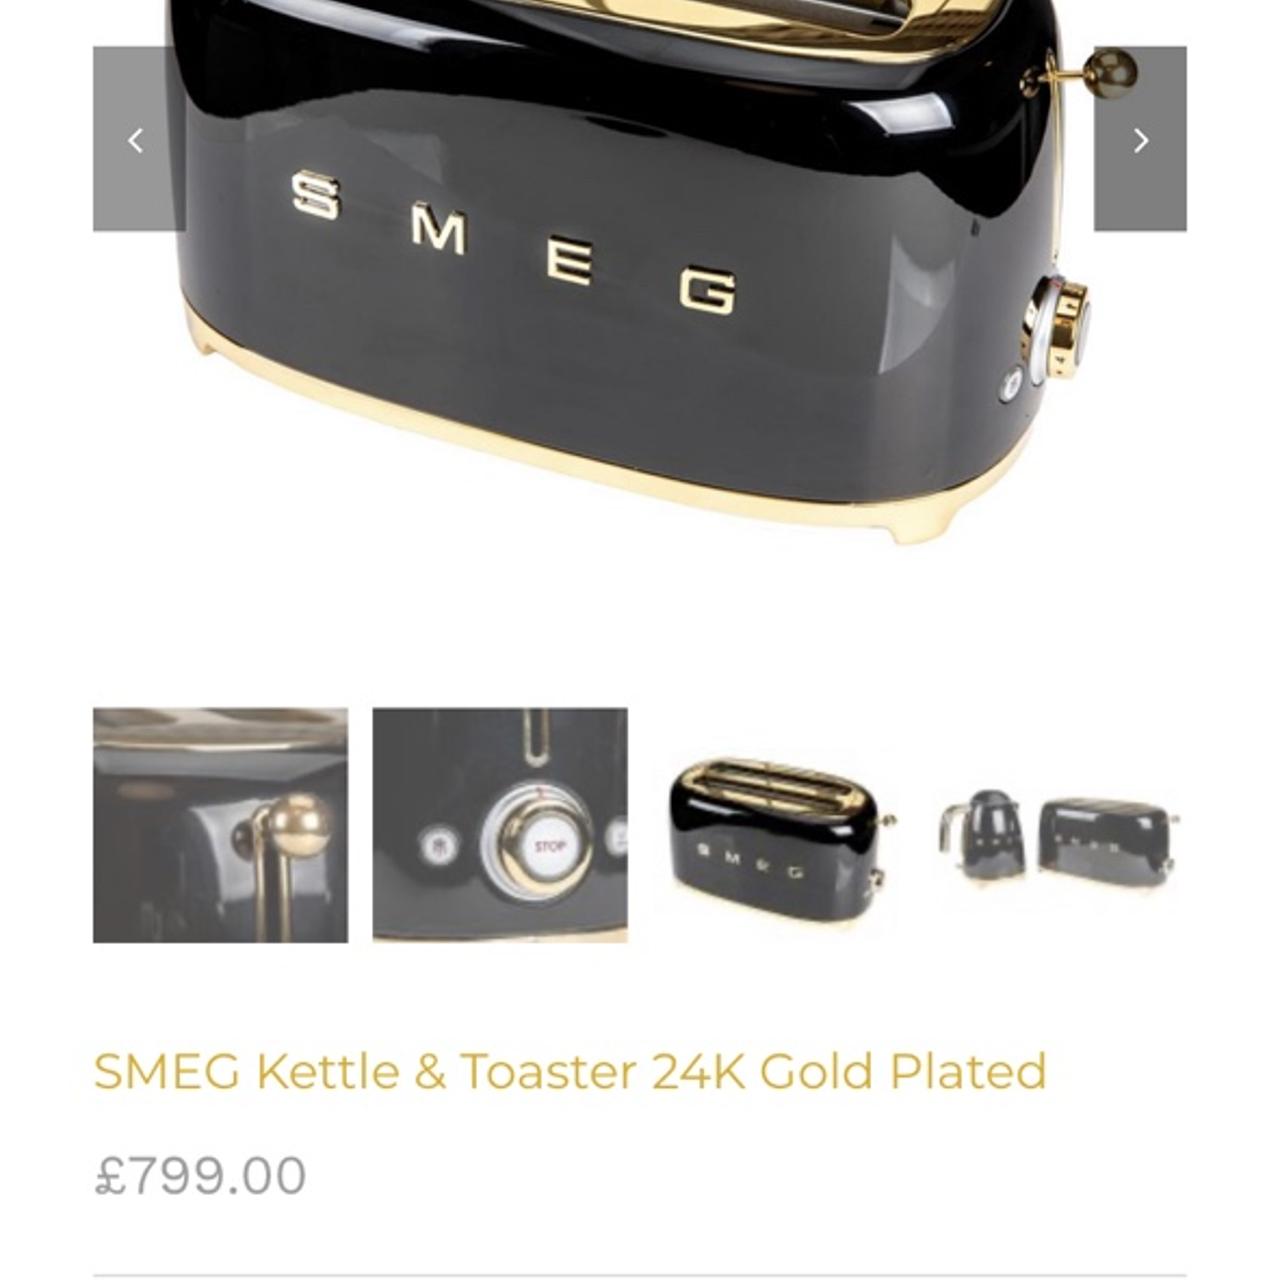 SMEG Kettle 24K Gold Plated